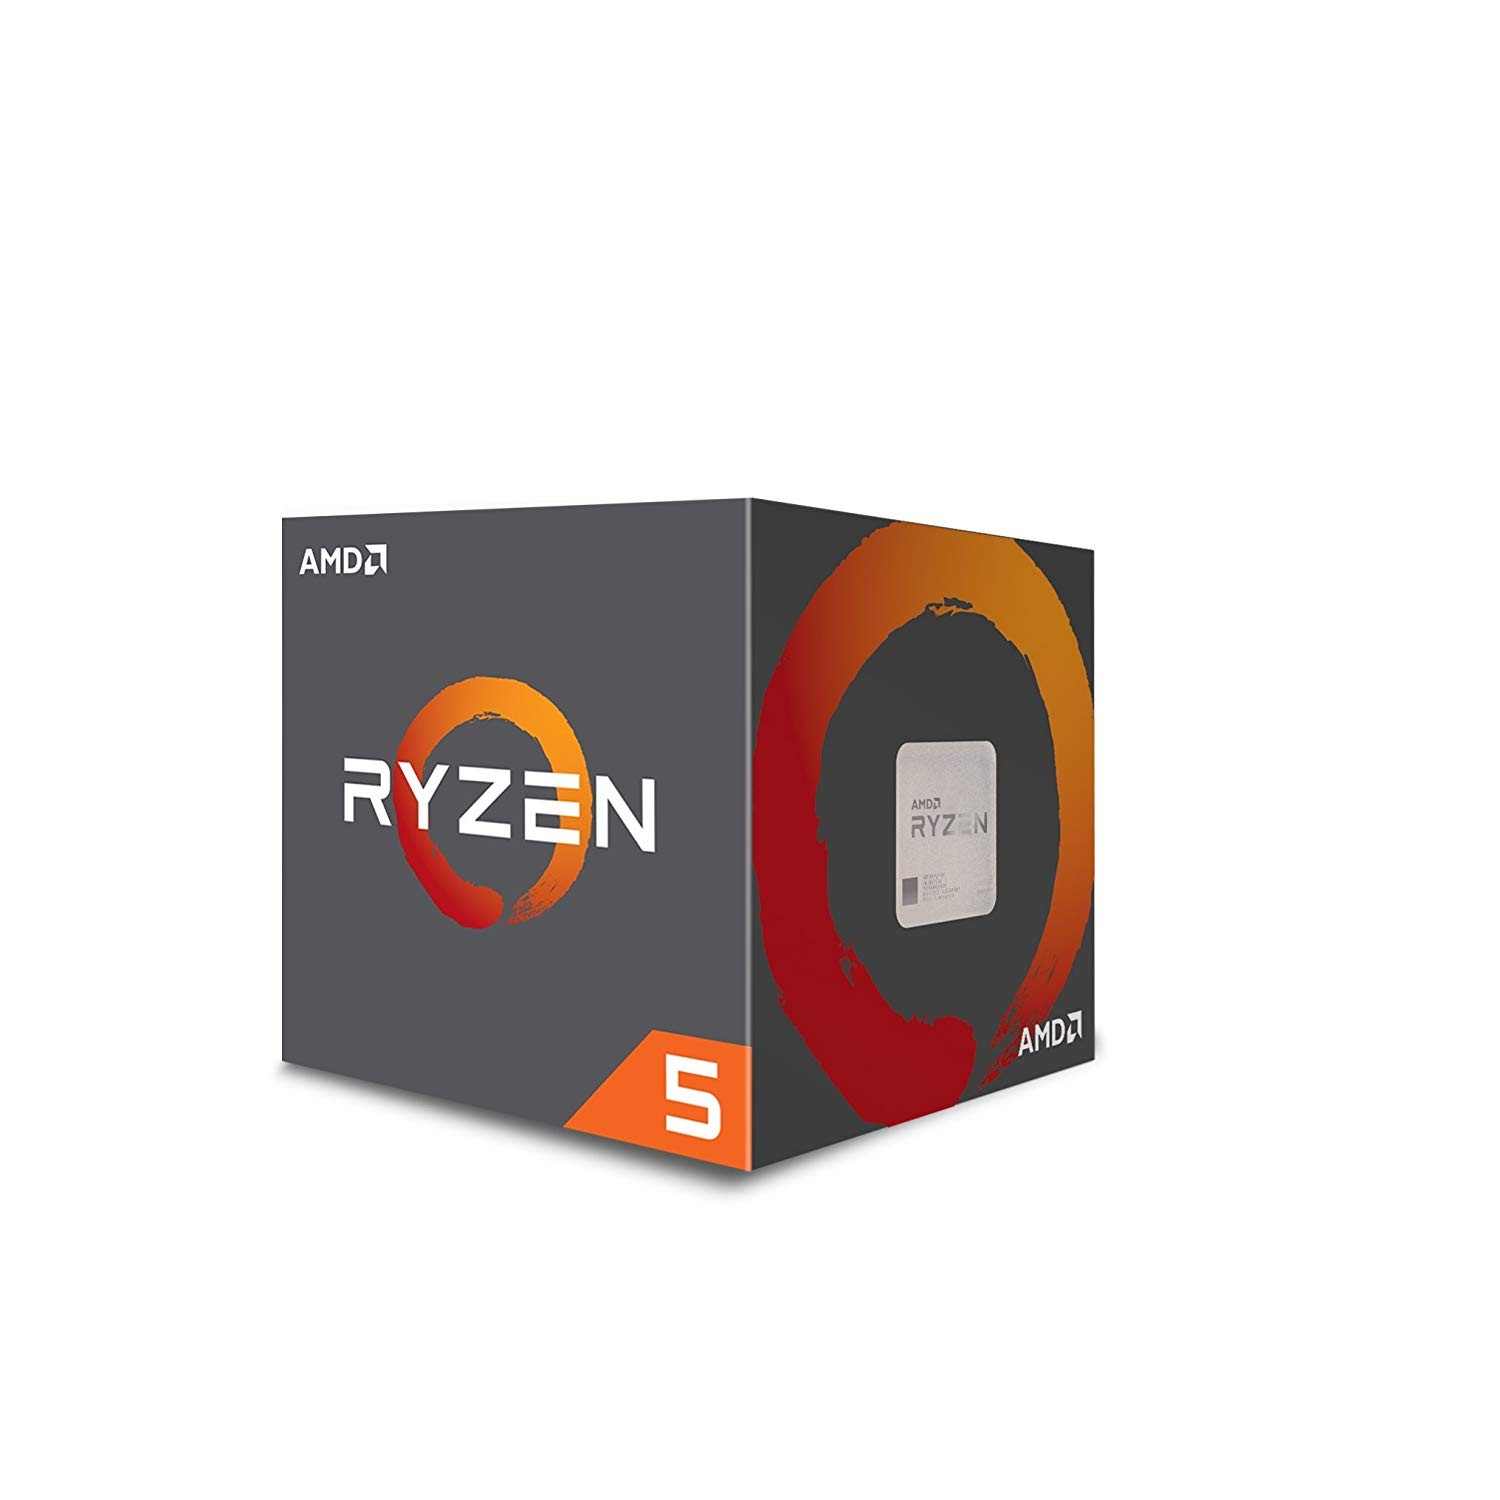 پردازنده AMD Ryzen 5 2600